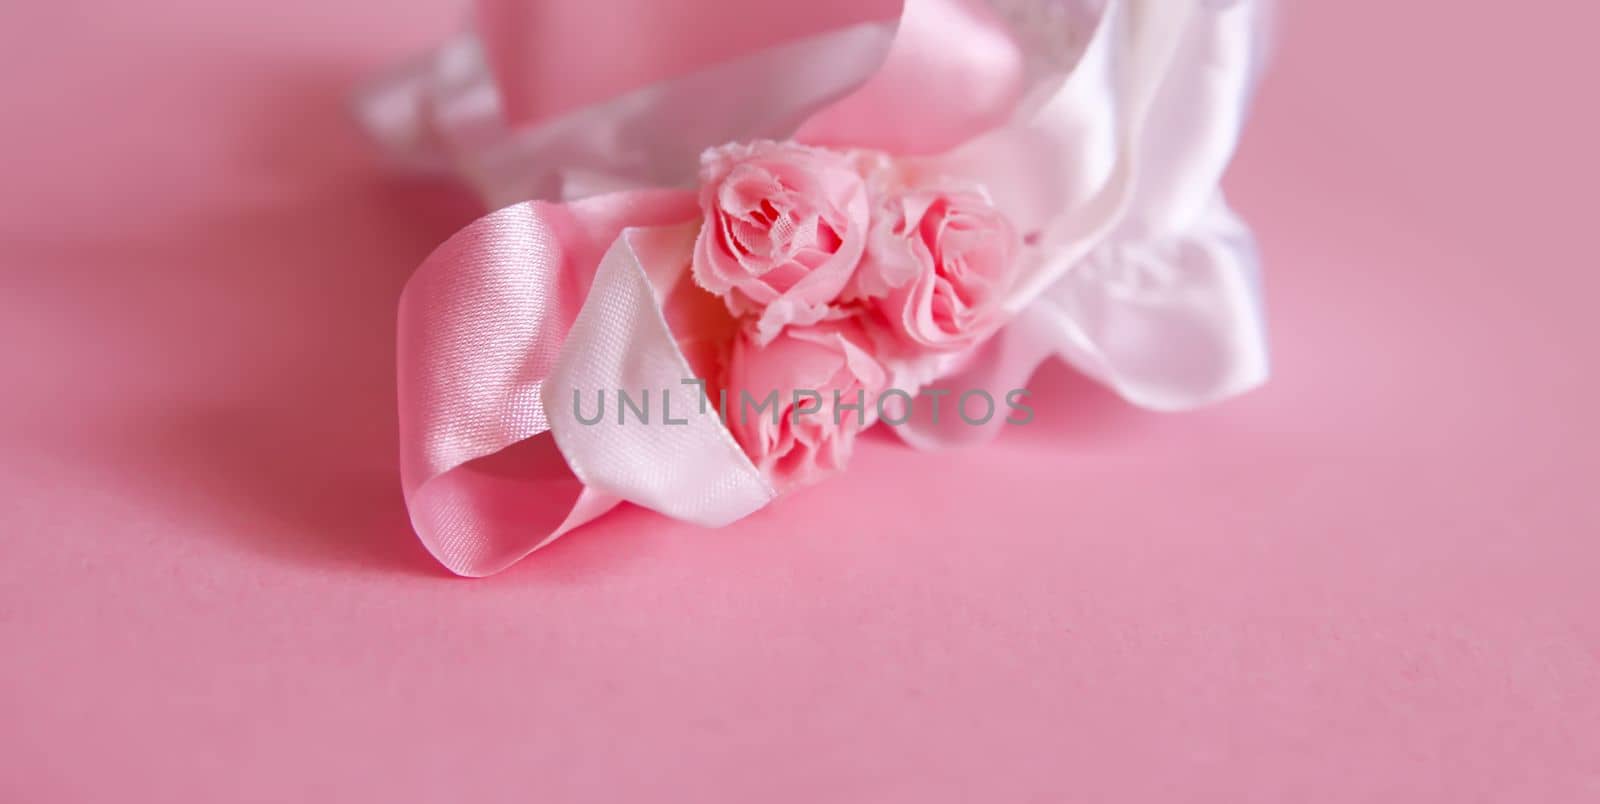 The bride's garter on a pink background. by nightlyviolet